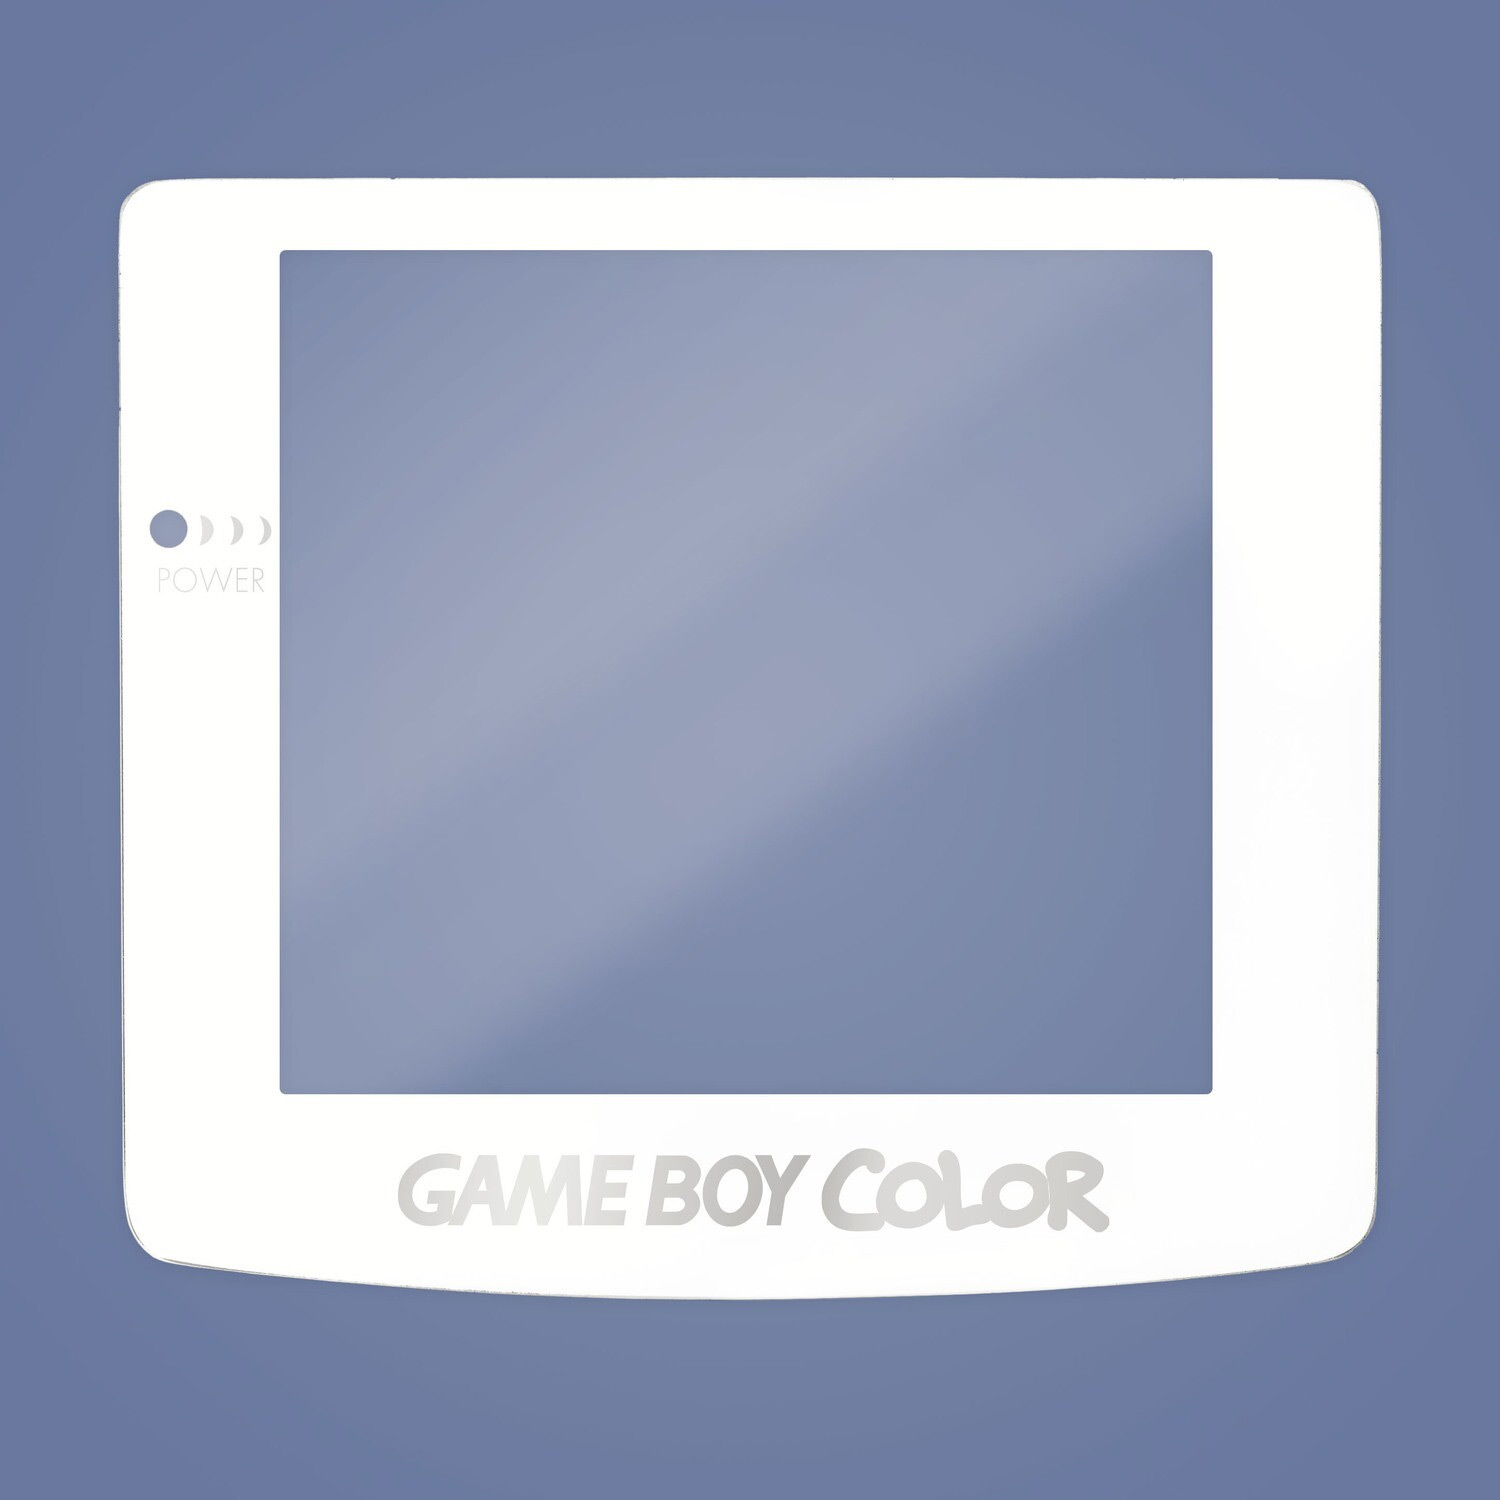 Game Boy Color Q5 Disc (White)